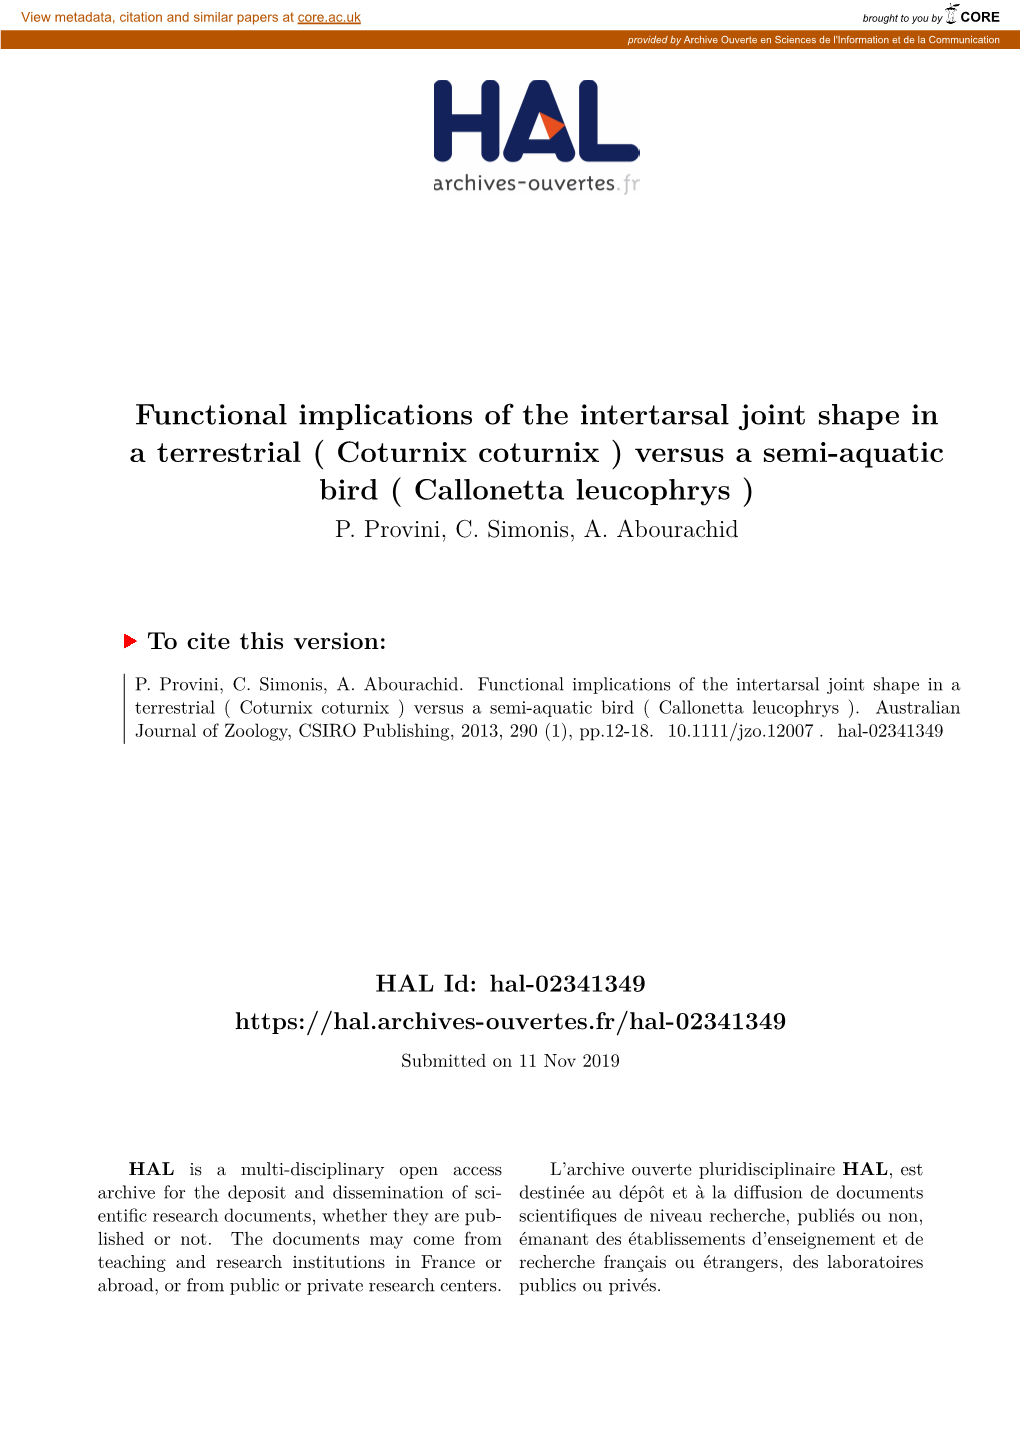 Functional Implications of the Intertarsal Joint Shape in a Terrestrial ( Coturnix Coturnix ) Versus a Semi-Aquatic Bird ( Callonetta Leucophrys ) P